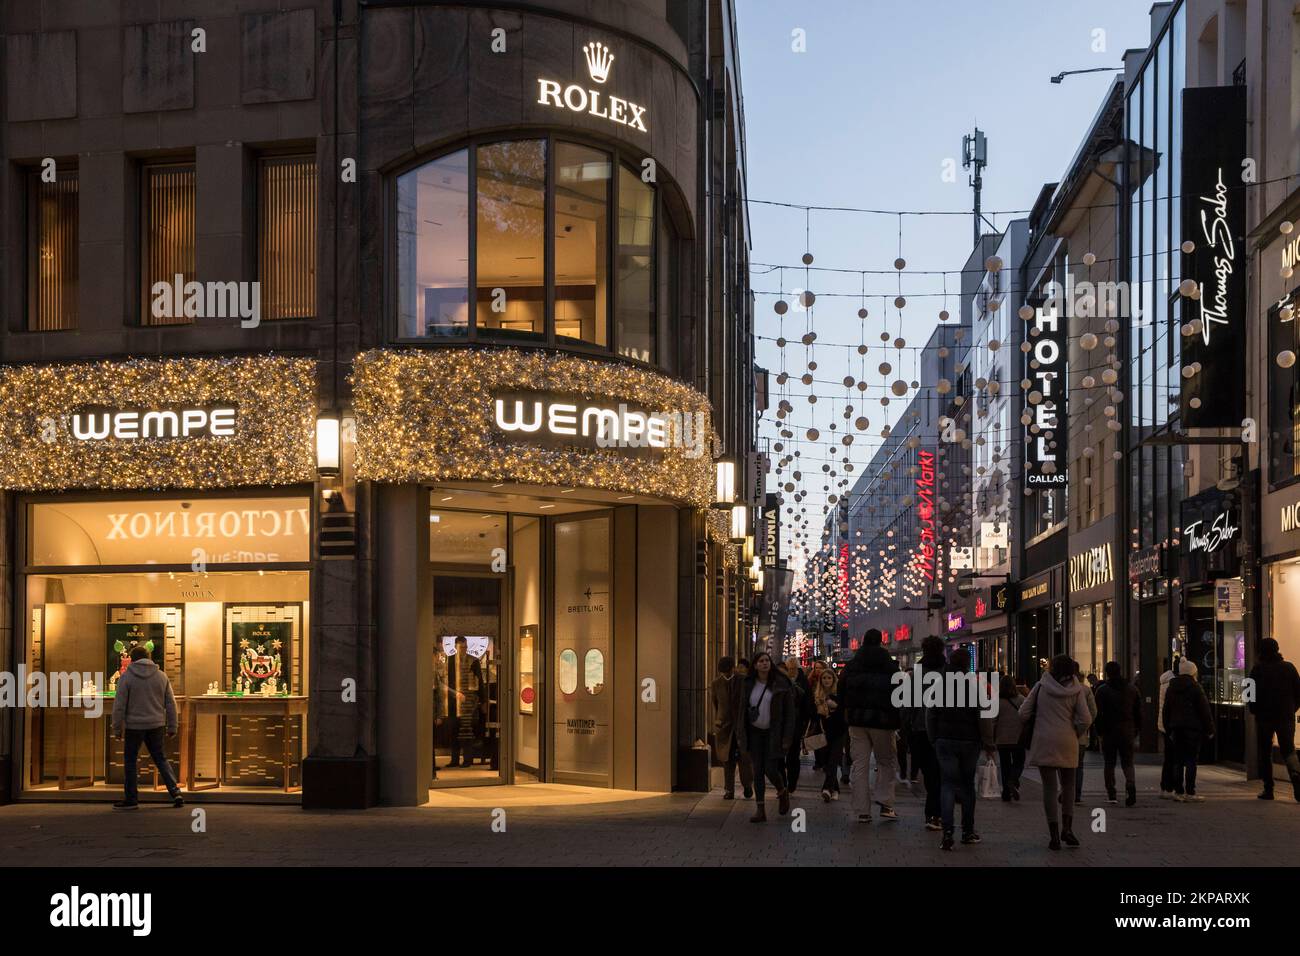 jeweler's shop Wempe on shopping street Hohe Stasse / Am Hof, Cologne, Germany. Juwelier Wempe auf der Einkaufsstrasse Hohe Strasse / Am Hof, Koeln, D Stock Photo